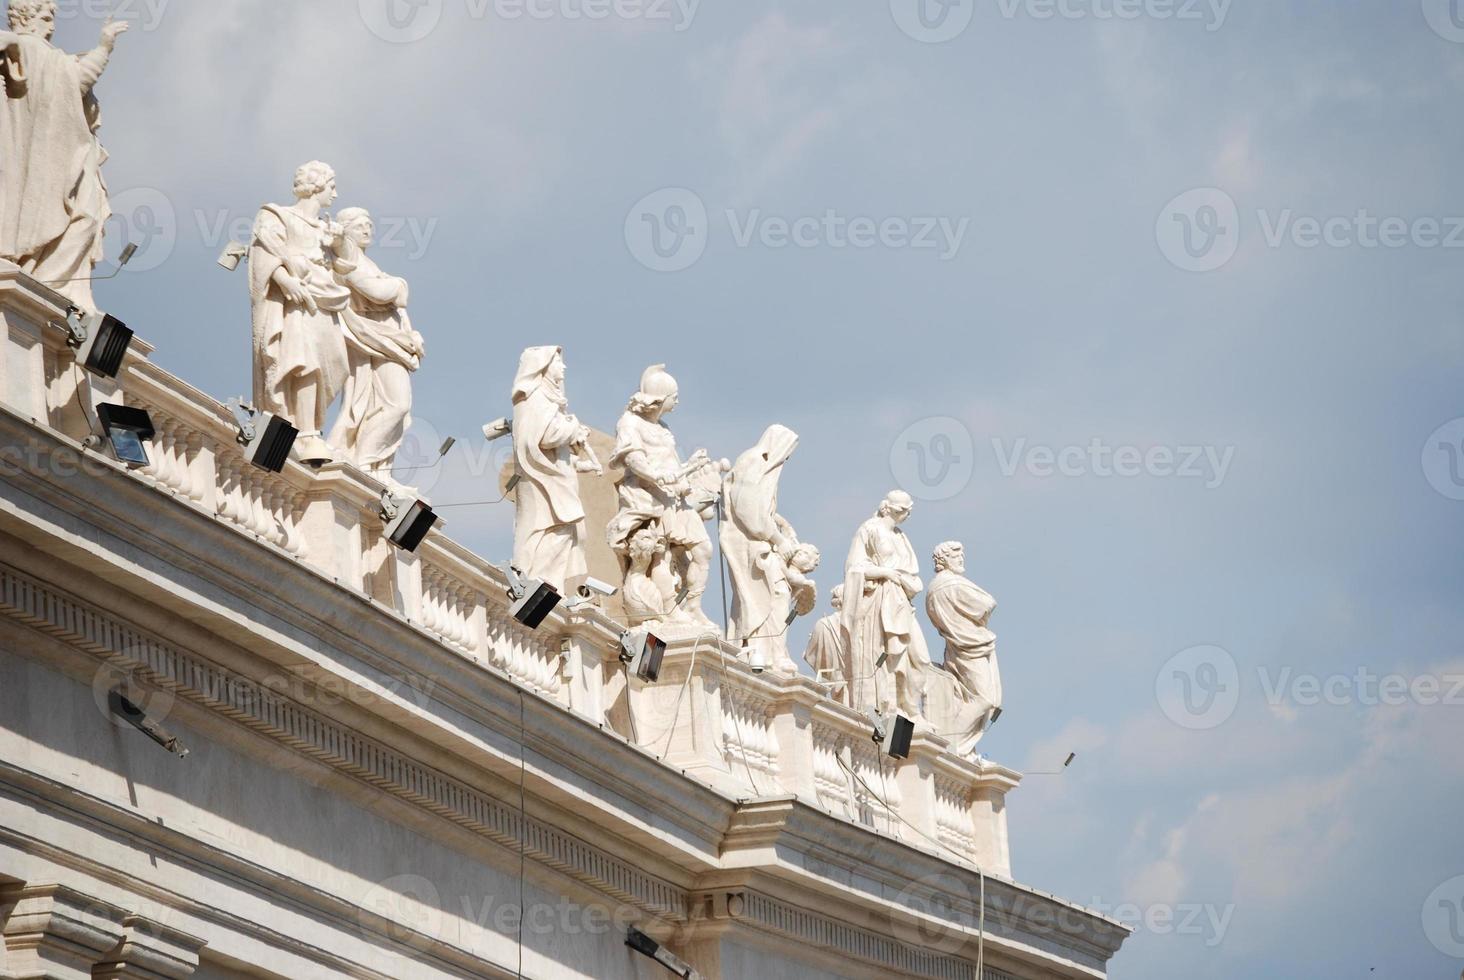 St. Peter's Basilica, St. Peter's Square, Vatican City photo